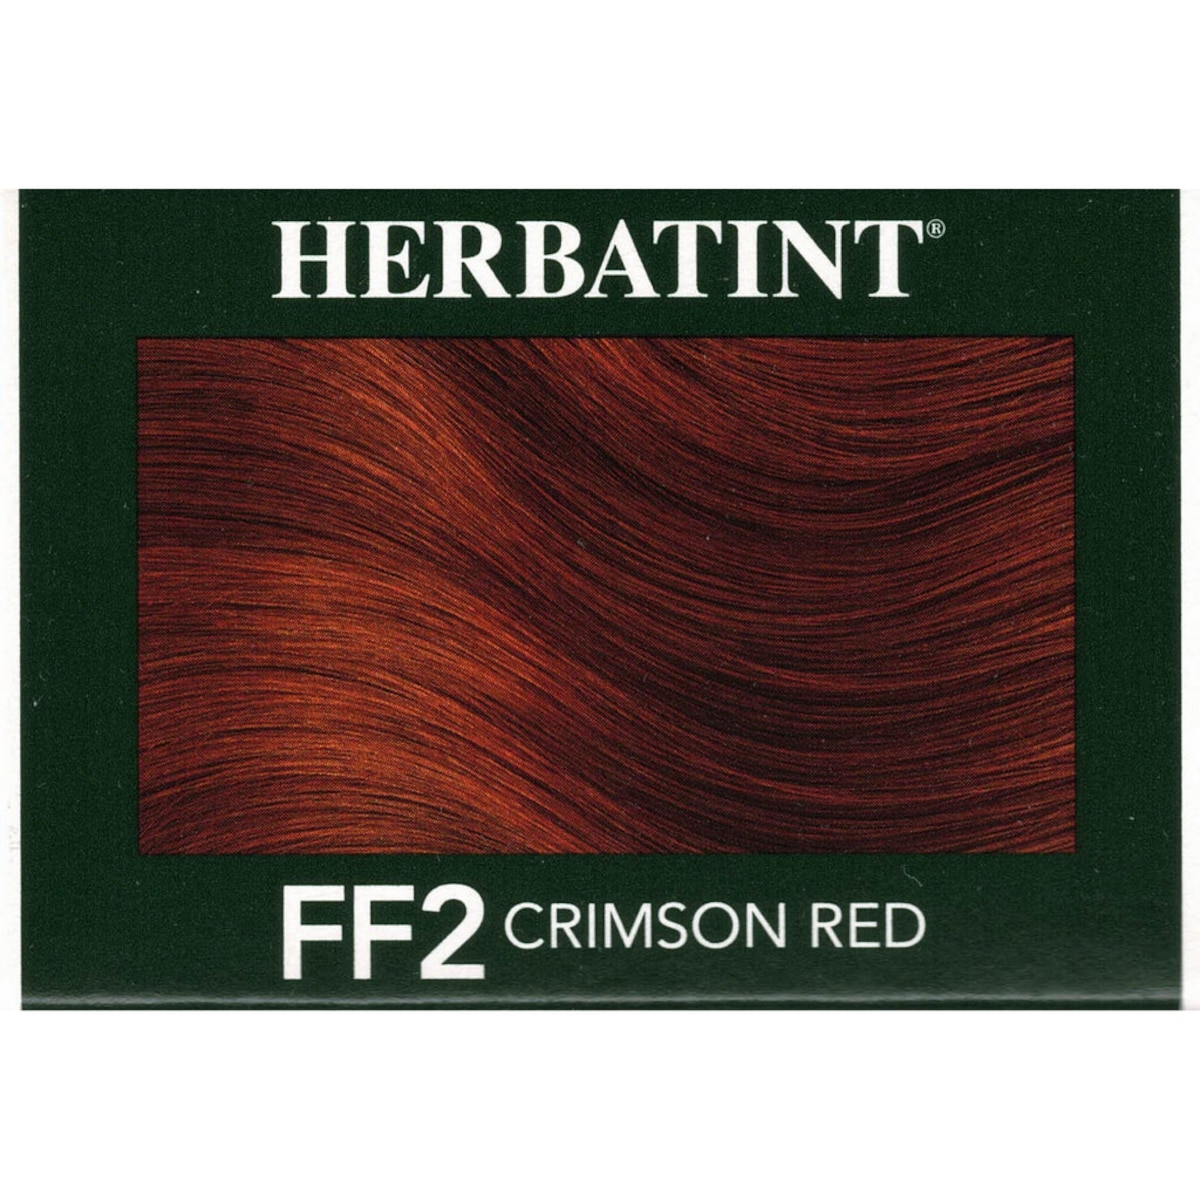 Herbatint Permanent Hair Colour Gel FF2 Crimson Red 150ml